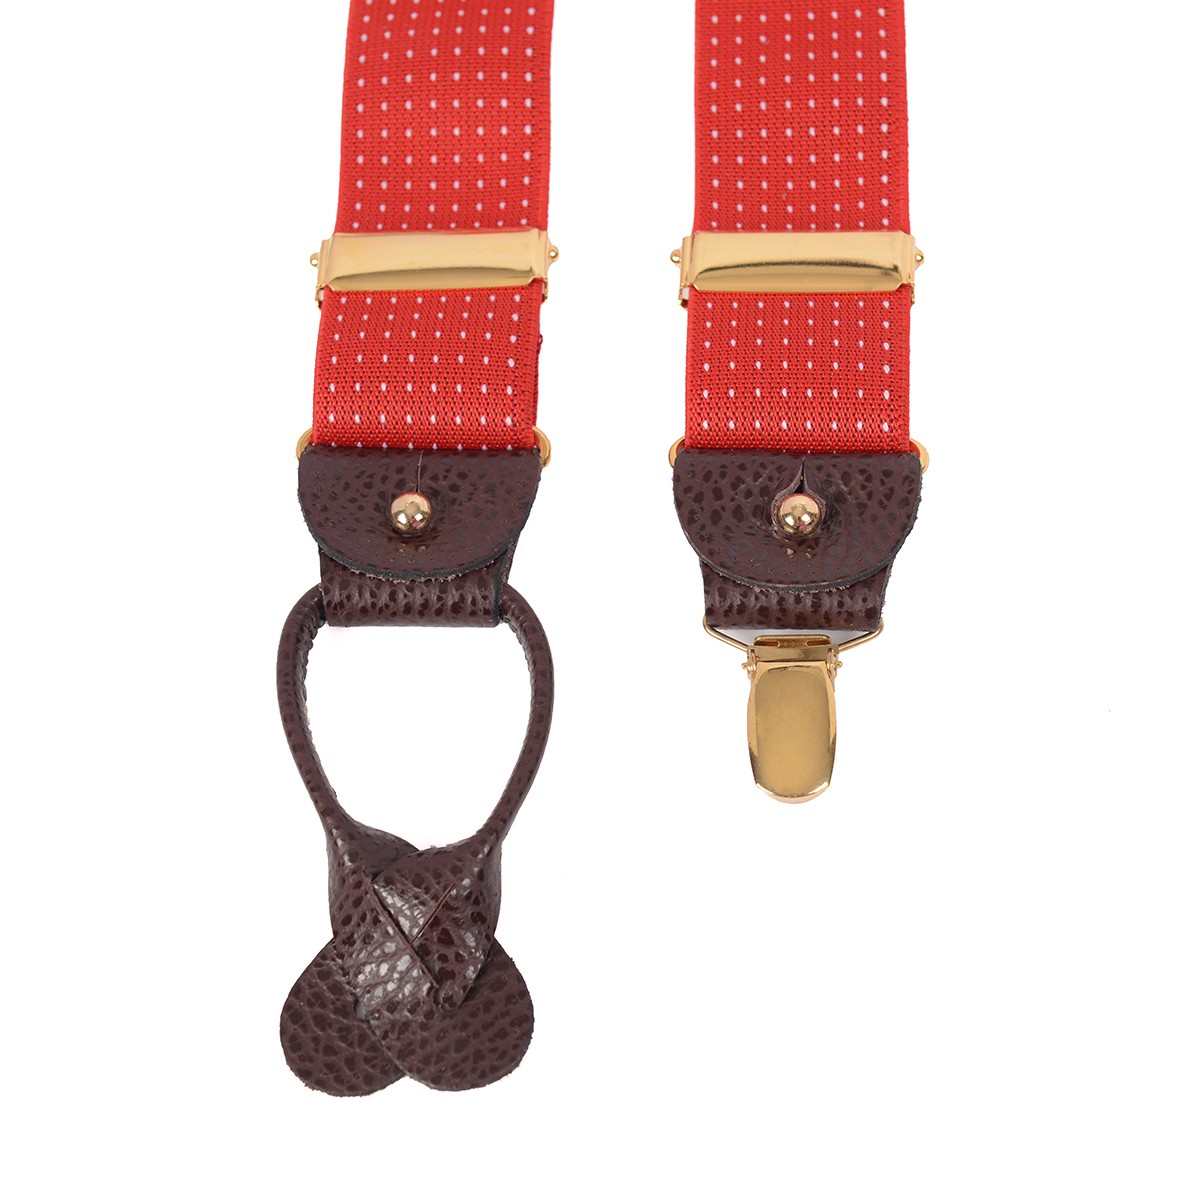 BRETELLE&amp;BRACES ( blur tere&amp; Bray si.z) suspenders dot pattern red ela stick type 